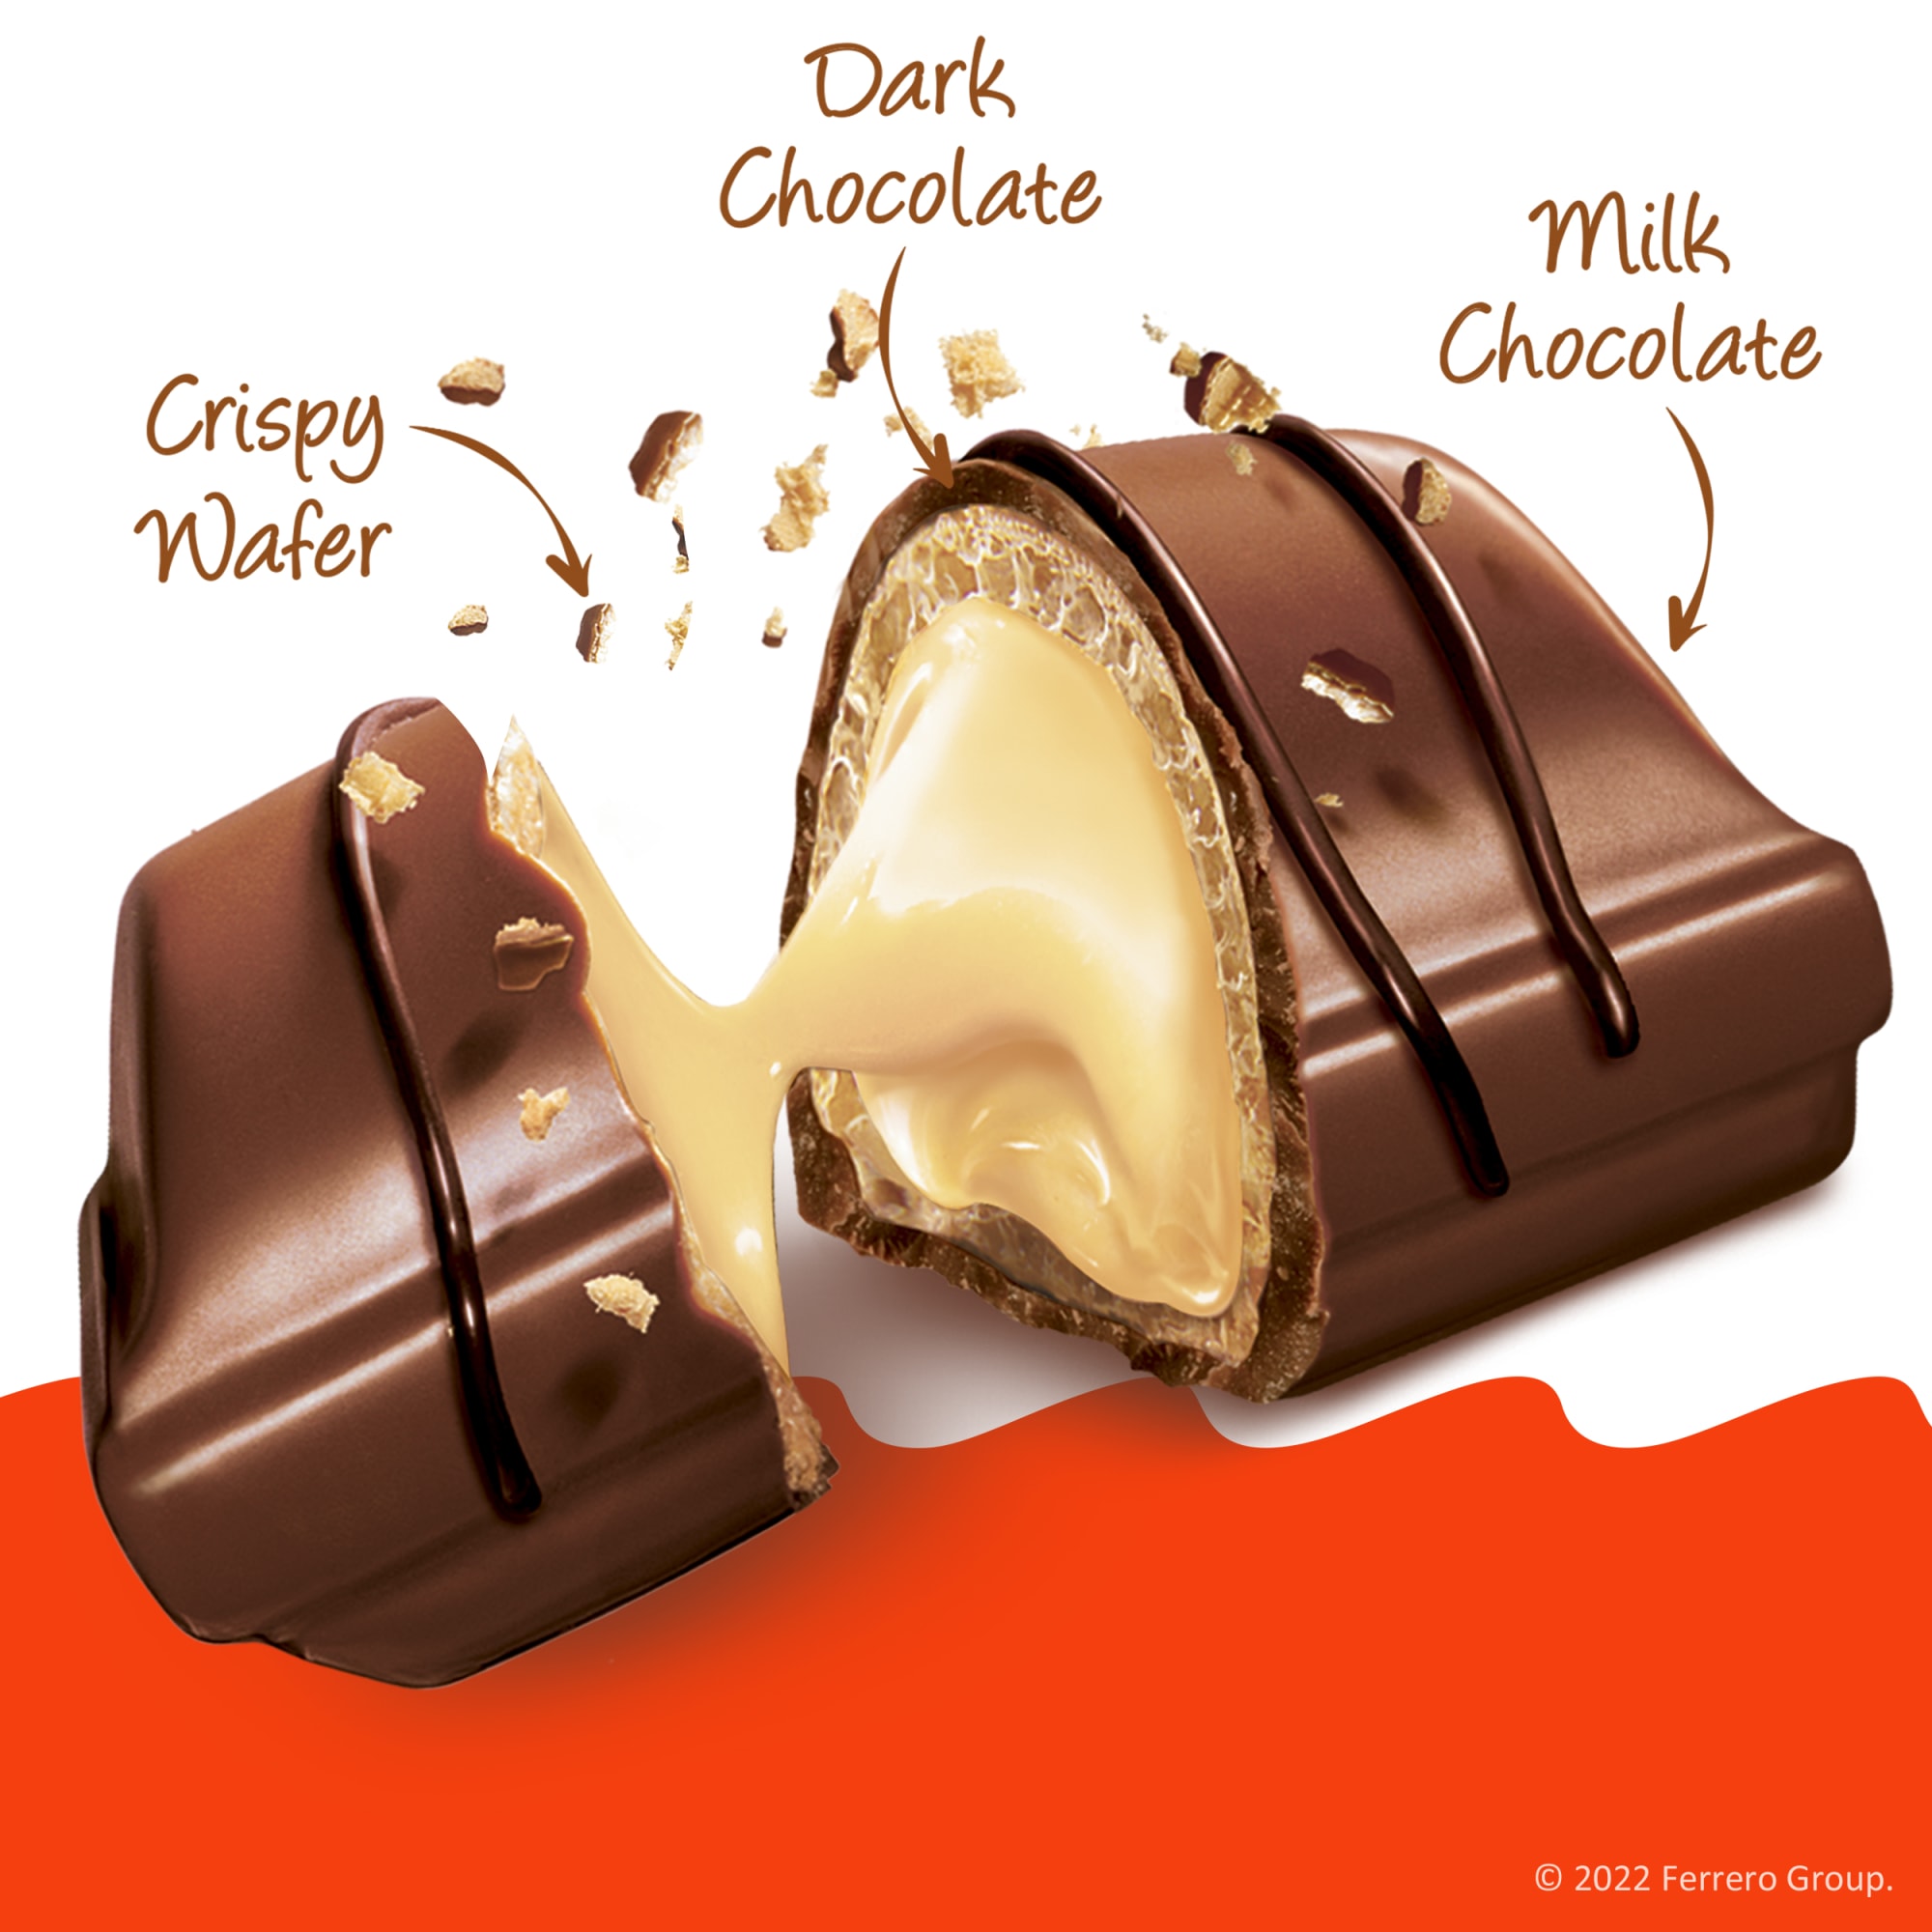 Kinder Bueno Mini, Milk Chocolate and Hazelnut Cream, Easter Basket Stuffers, 5.7 oz - image 4 of 11